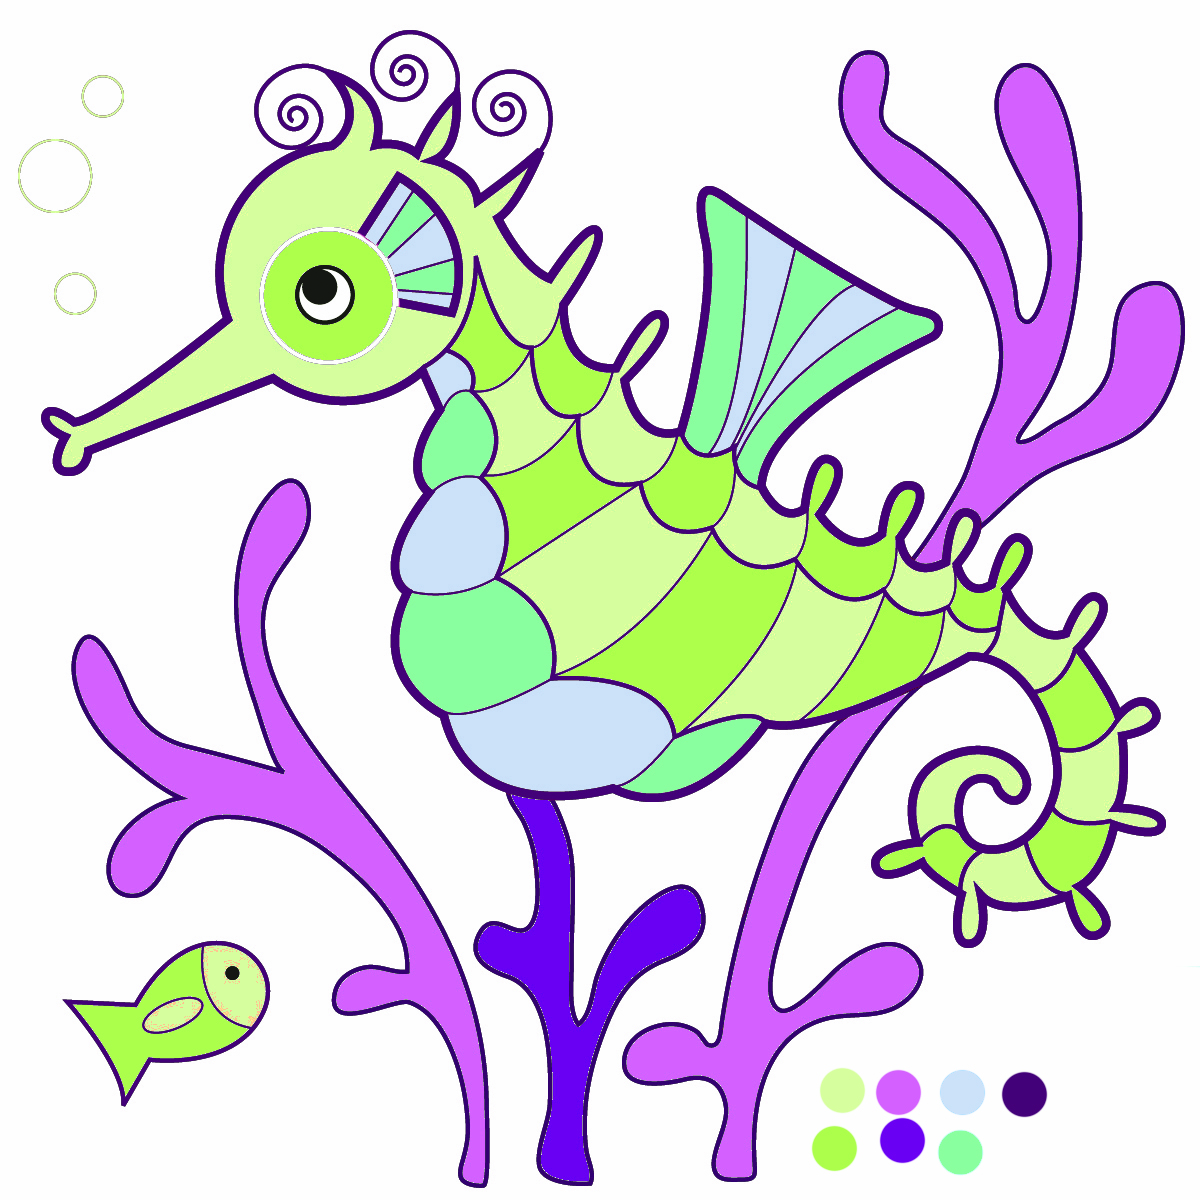 Seahorse clip art images free - Seahorse Clip Art